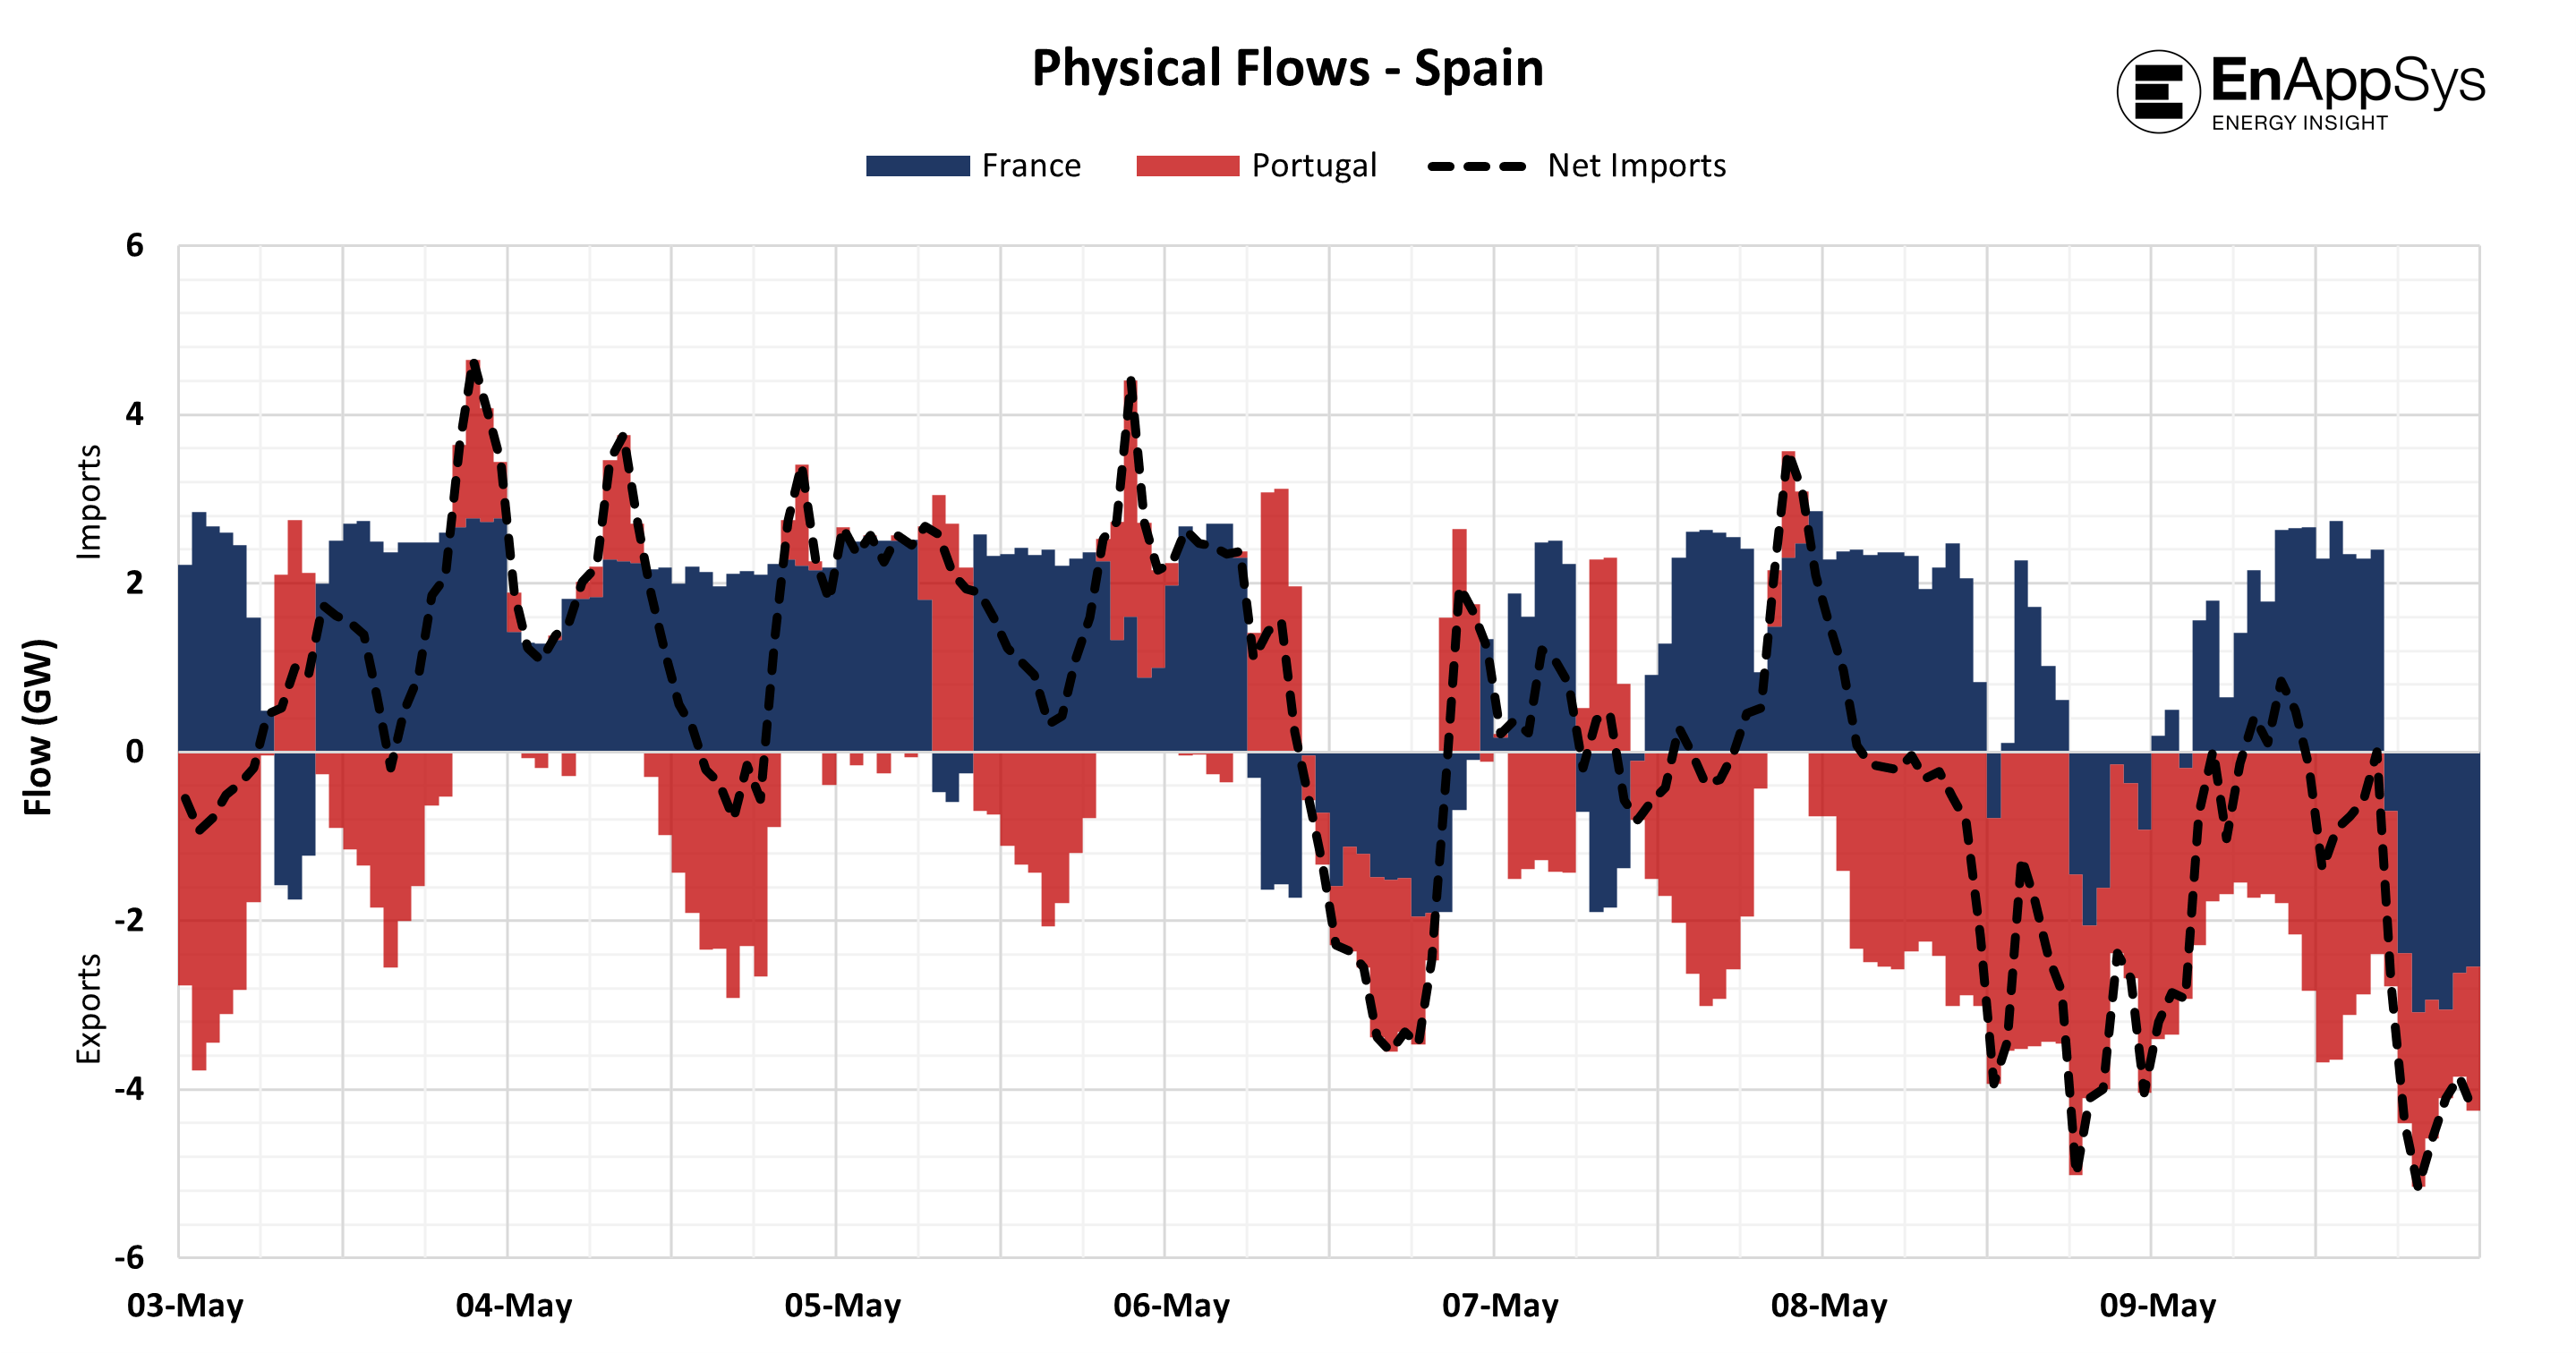 Figure 2: Physical Flows - Spain